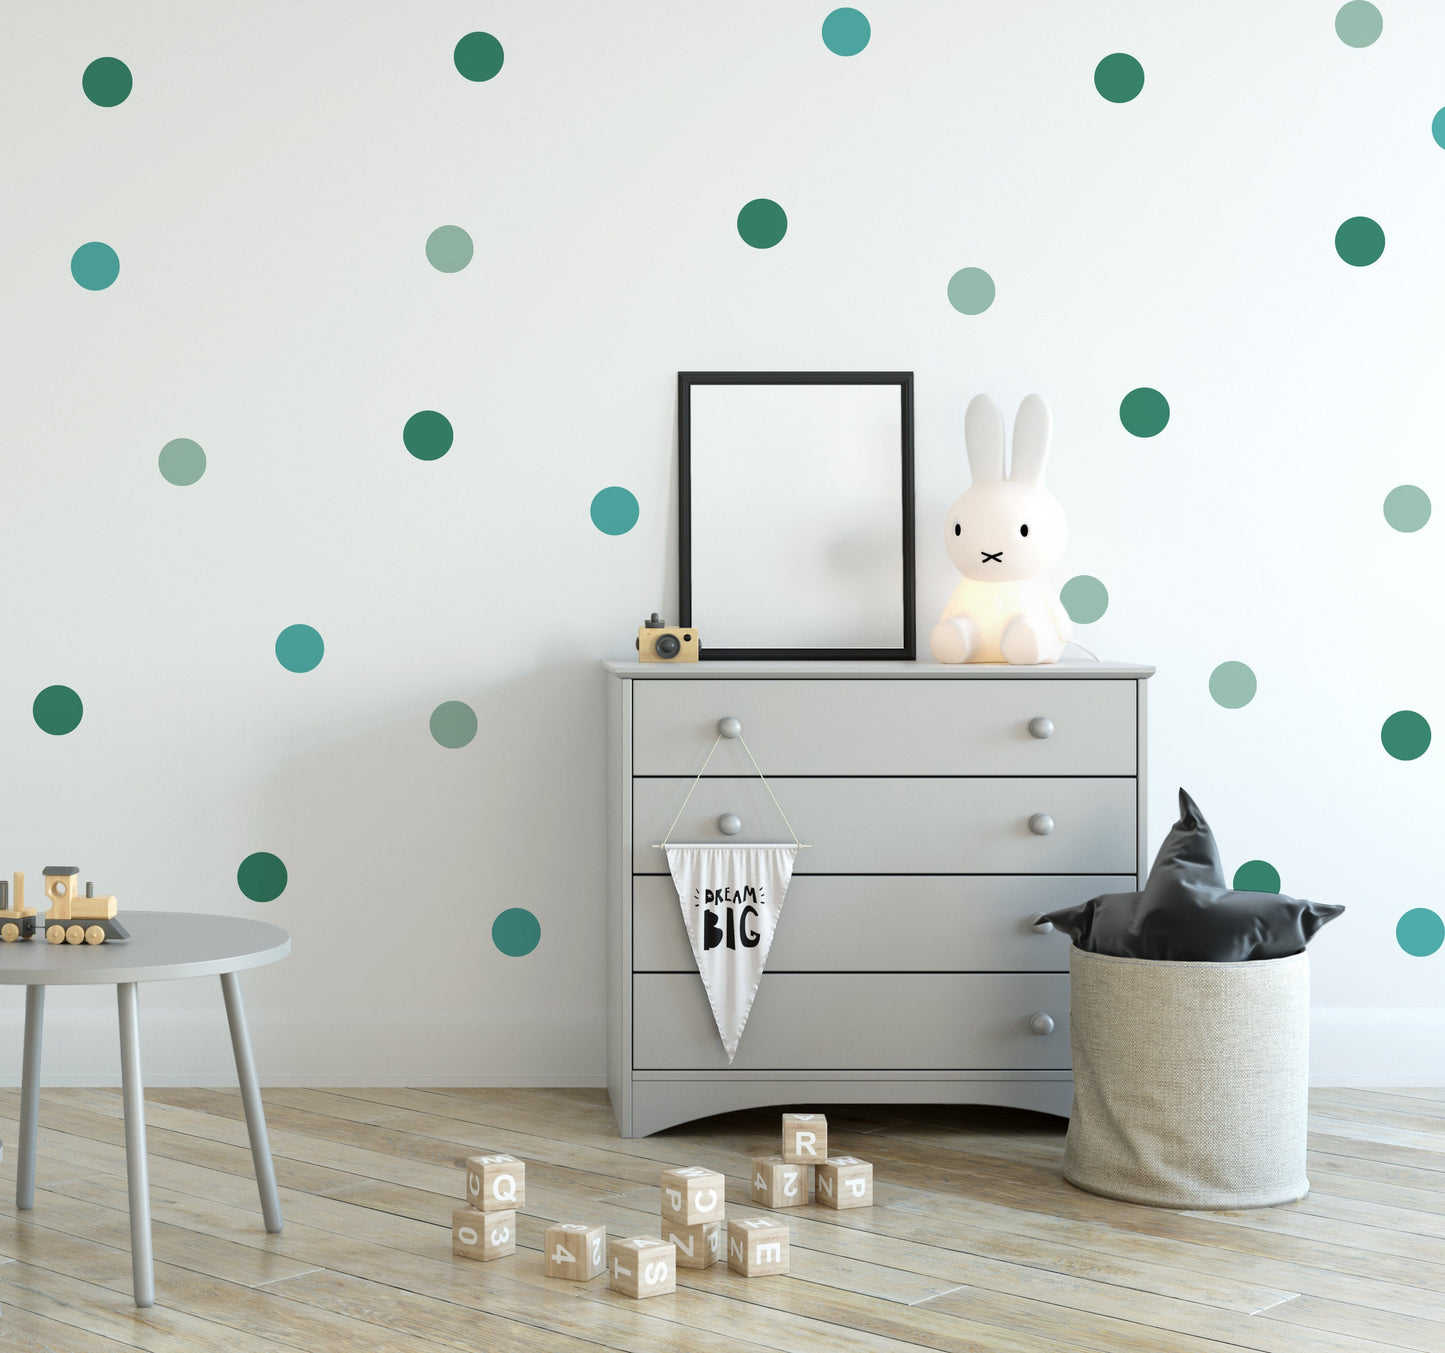 Mint Green Polka Dot Wall Sticker Decals